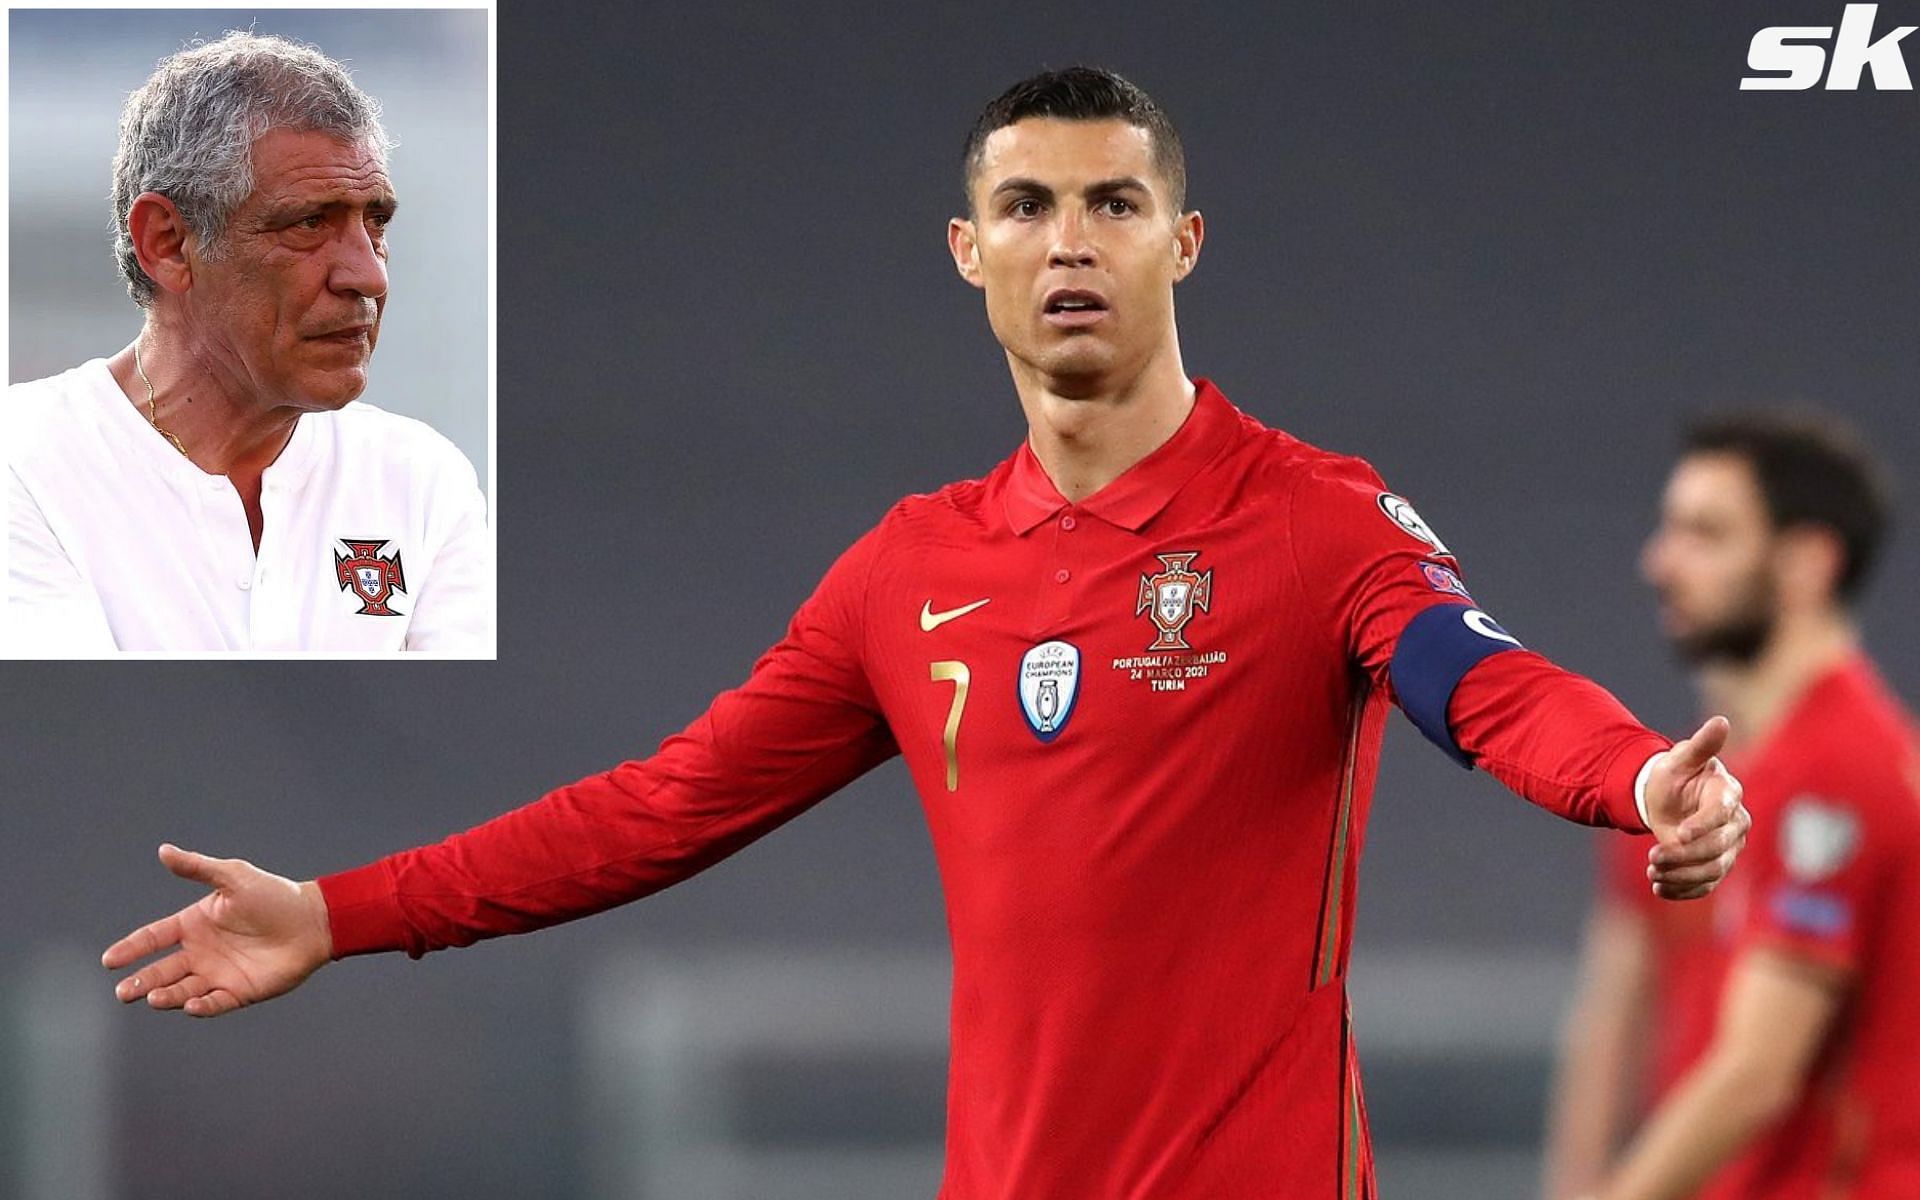 Portugal coach Fernando Santos explains why Cristiano Ronaldo appeared frustrated